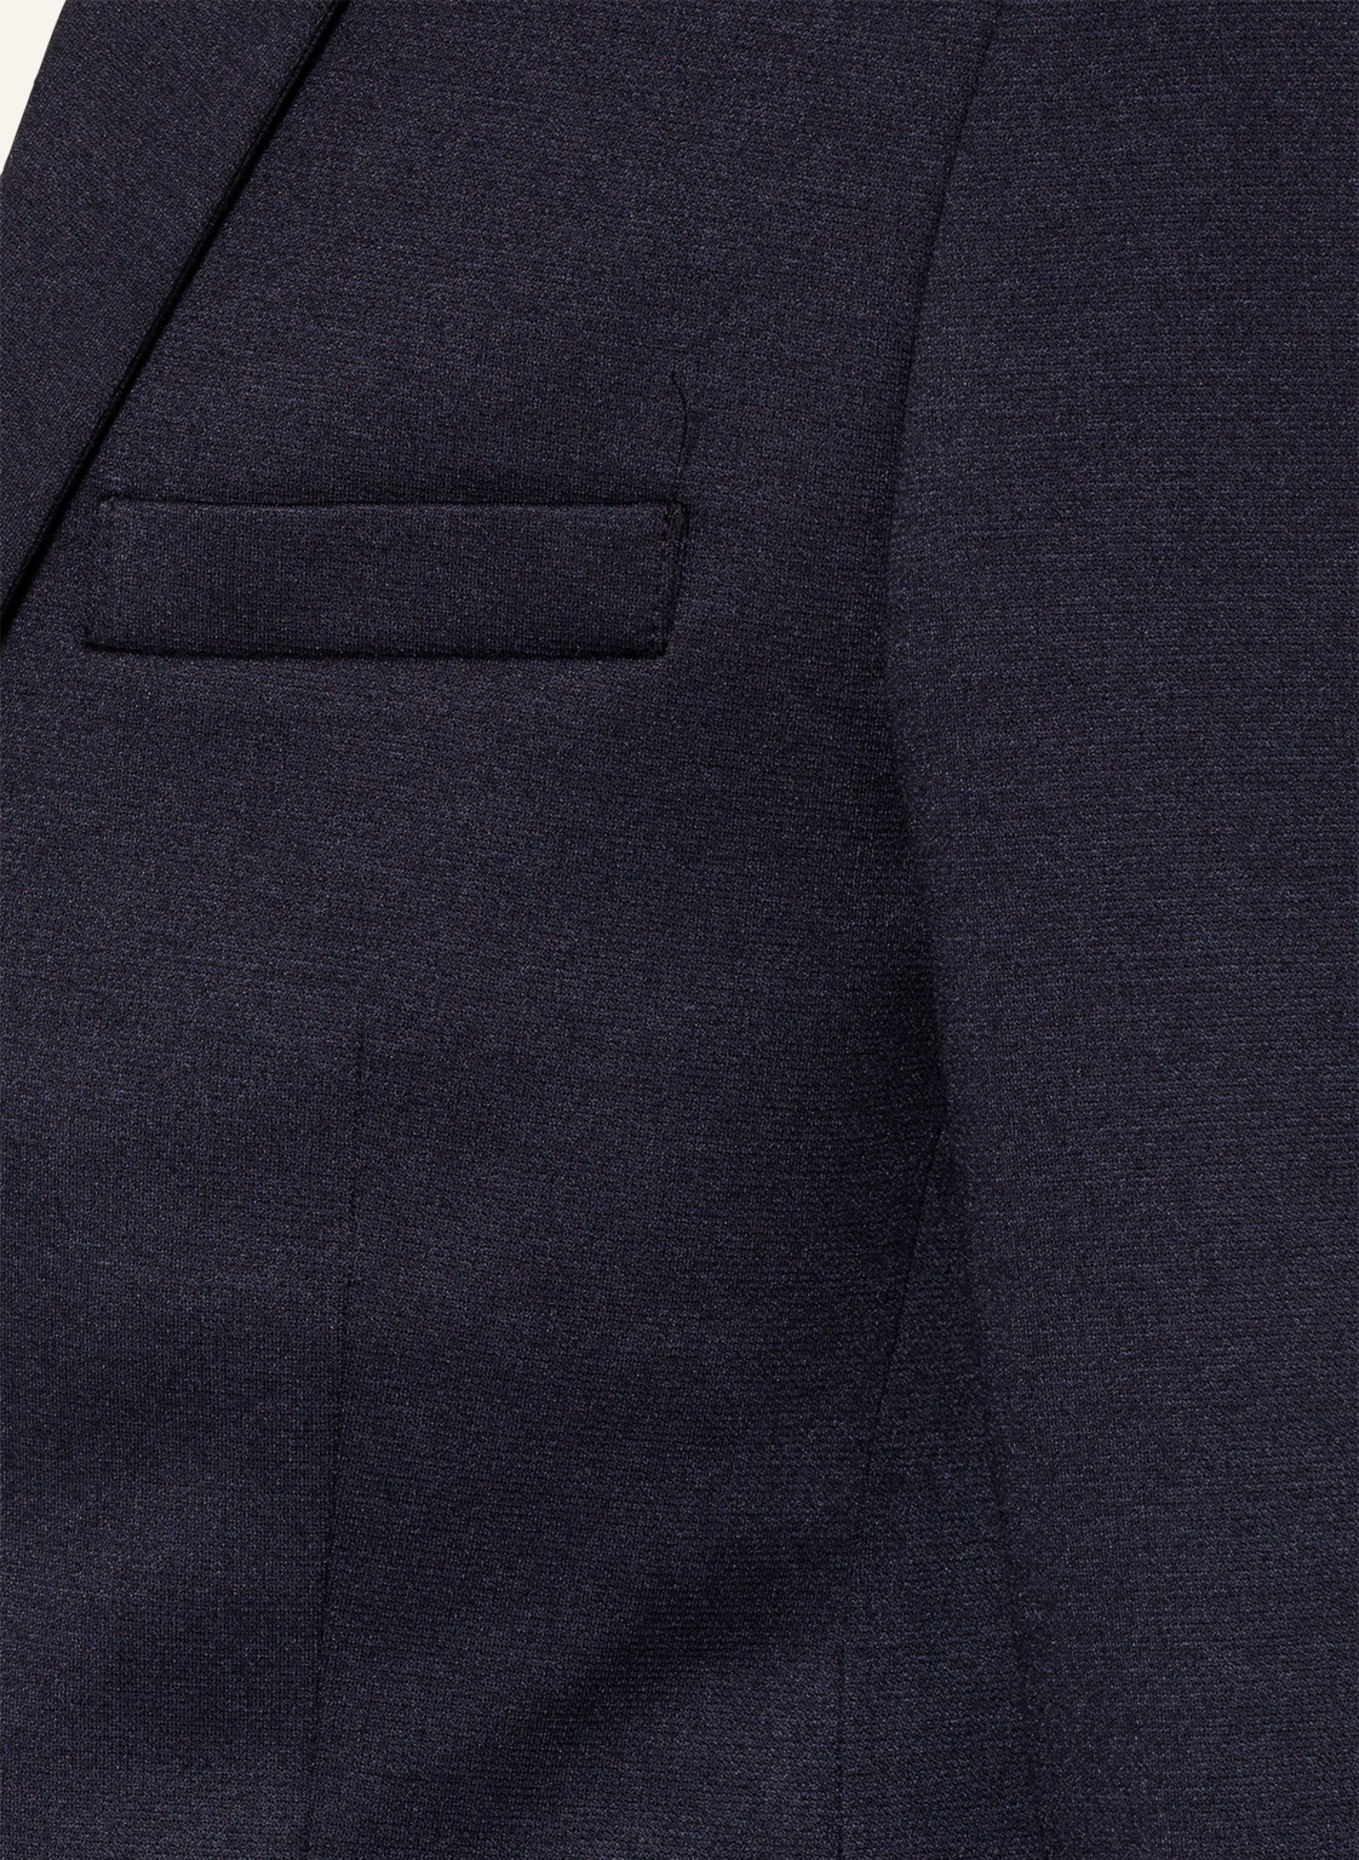 G.O.L. FINEST COLLECTION Jerseysakko Slim Fit, Farbe: DUNKELBLAU (Bild 3)